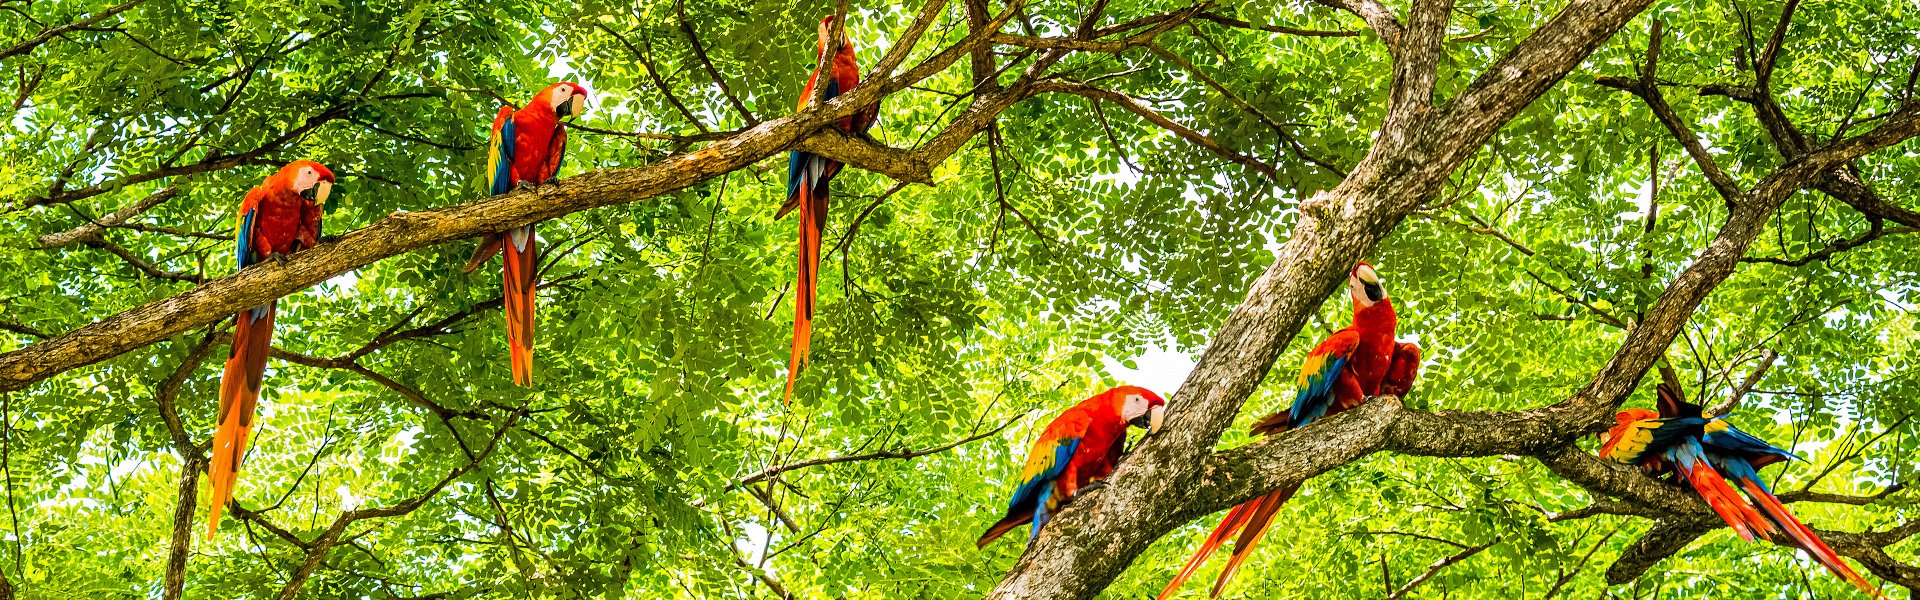 Bunte Vielfalt in Costa Rica (hier: Aras) | � OGphoto, iStockphoto.com / Cham�leon